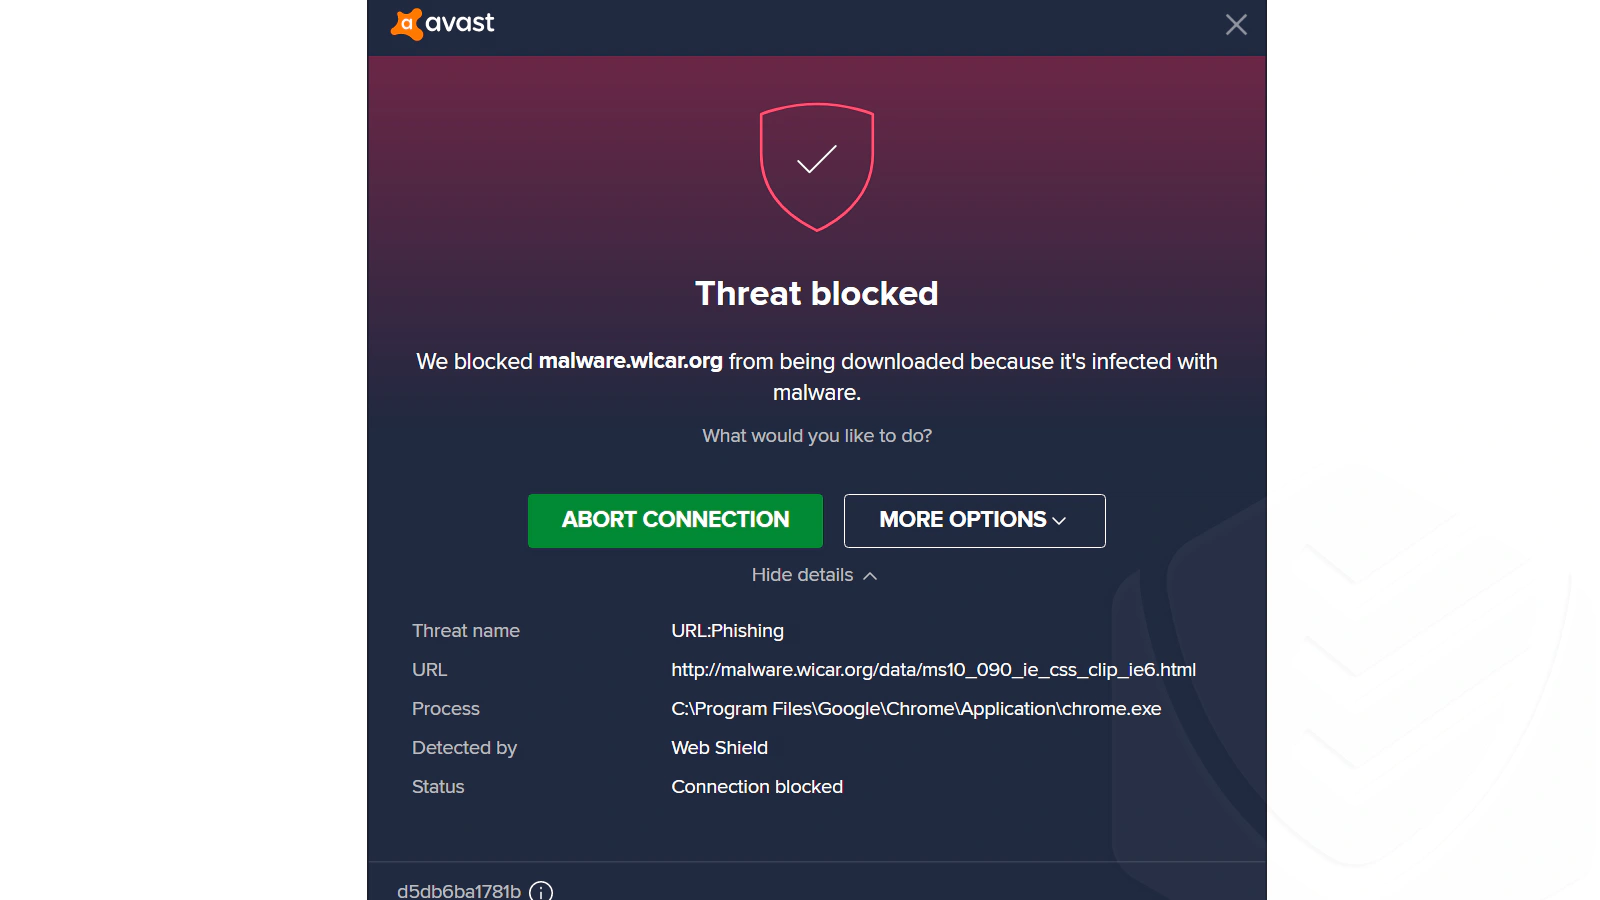 Avast blocked wicar.org